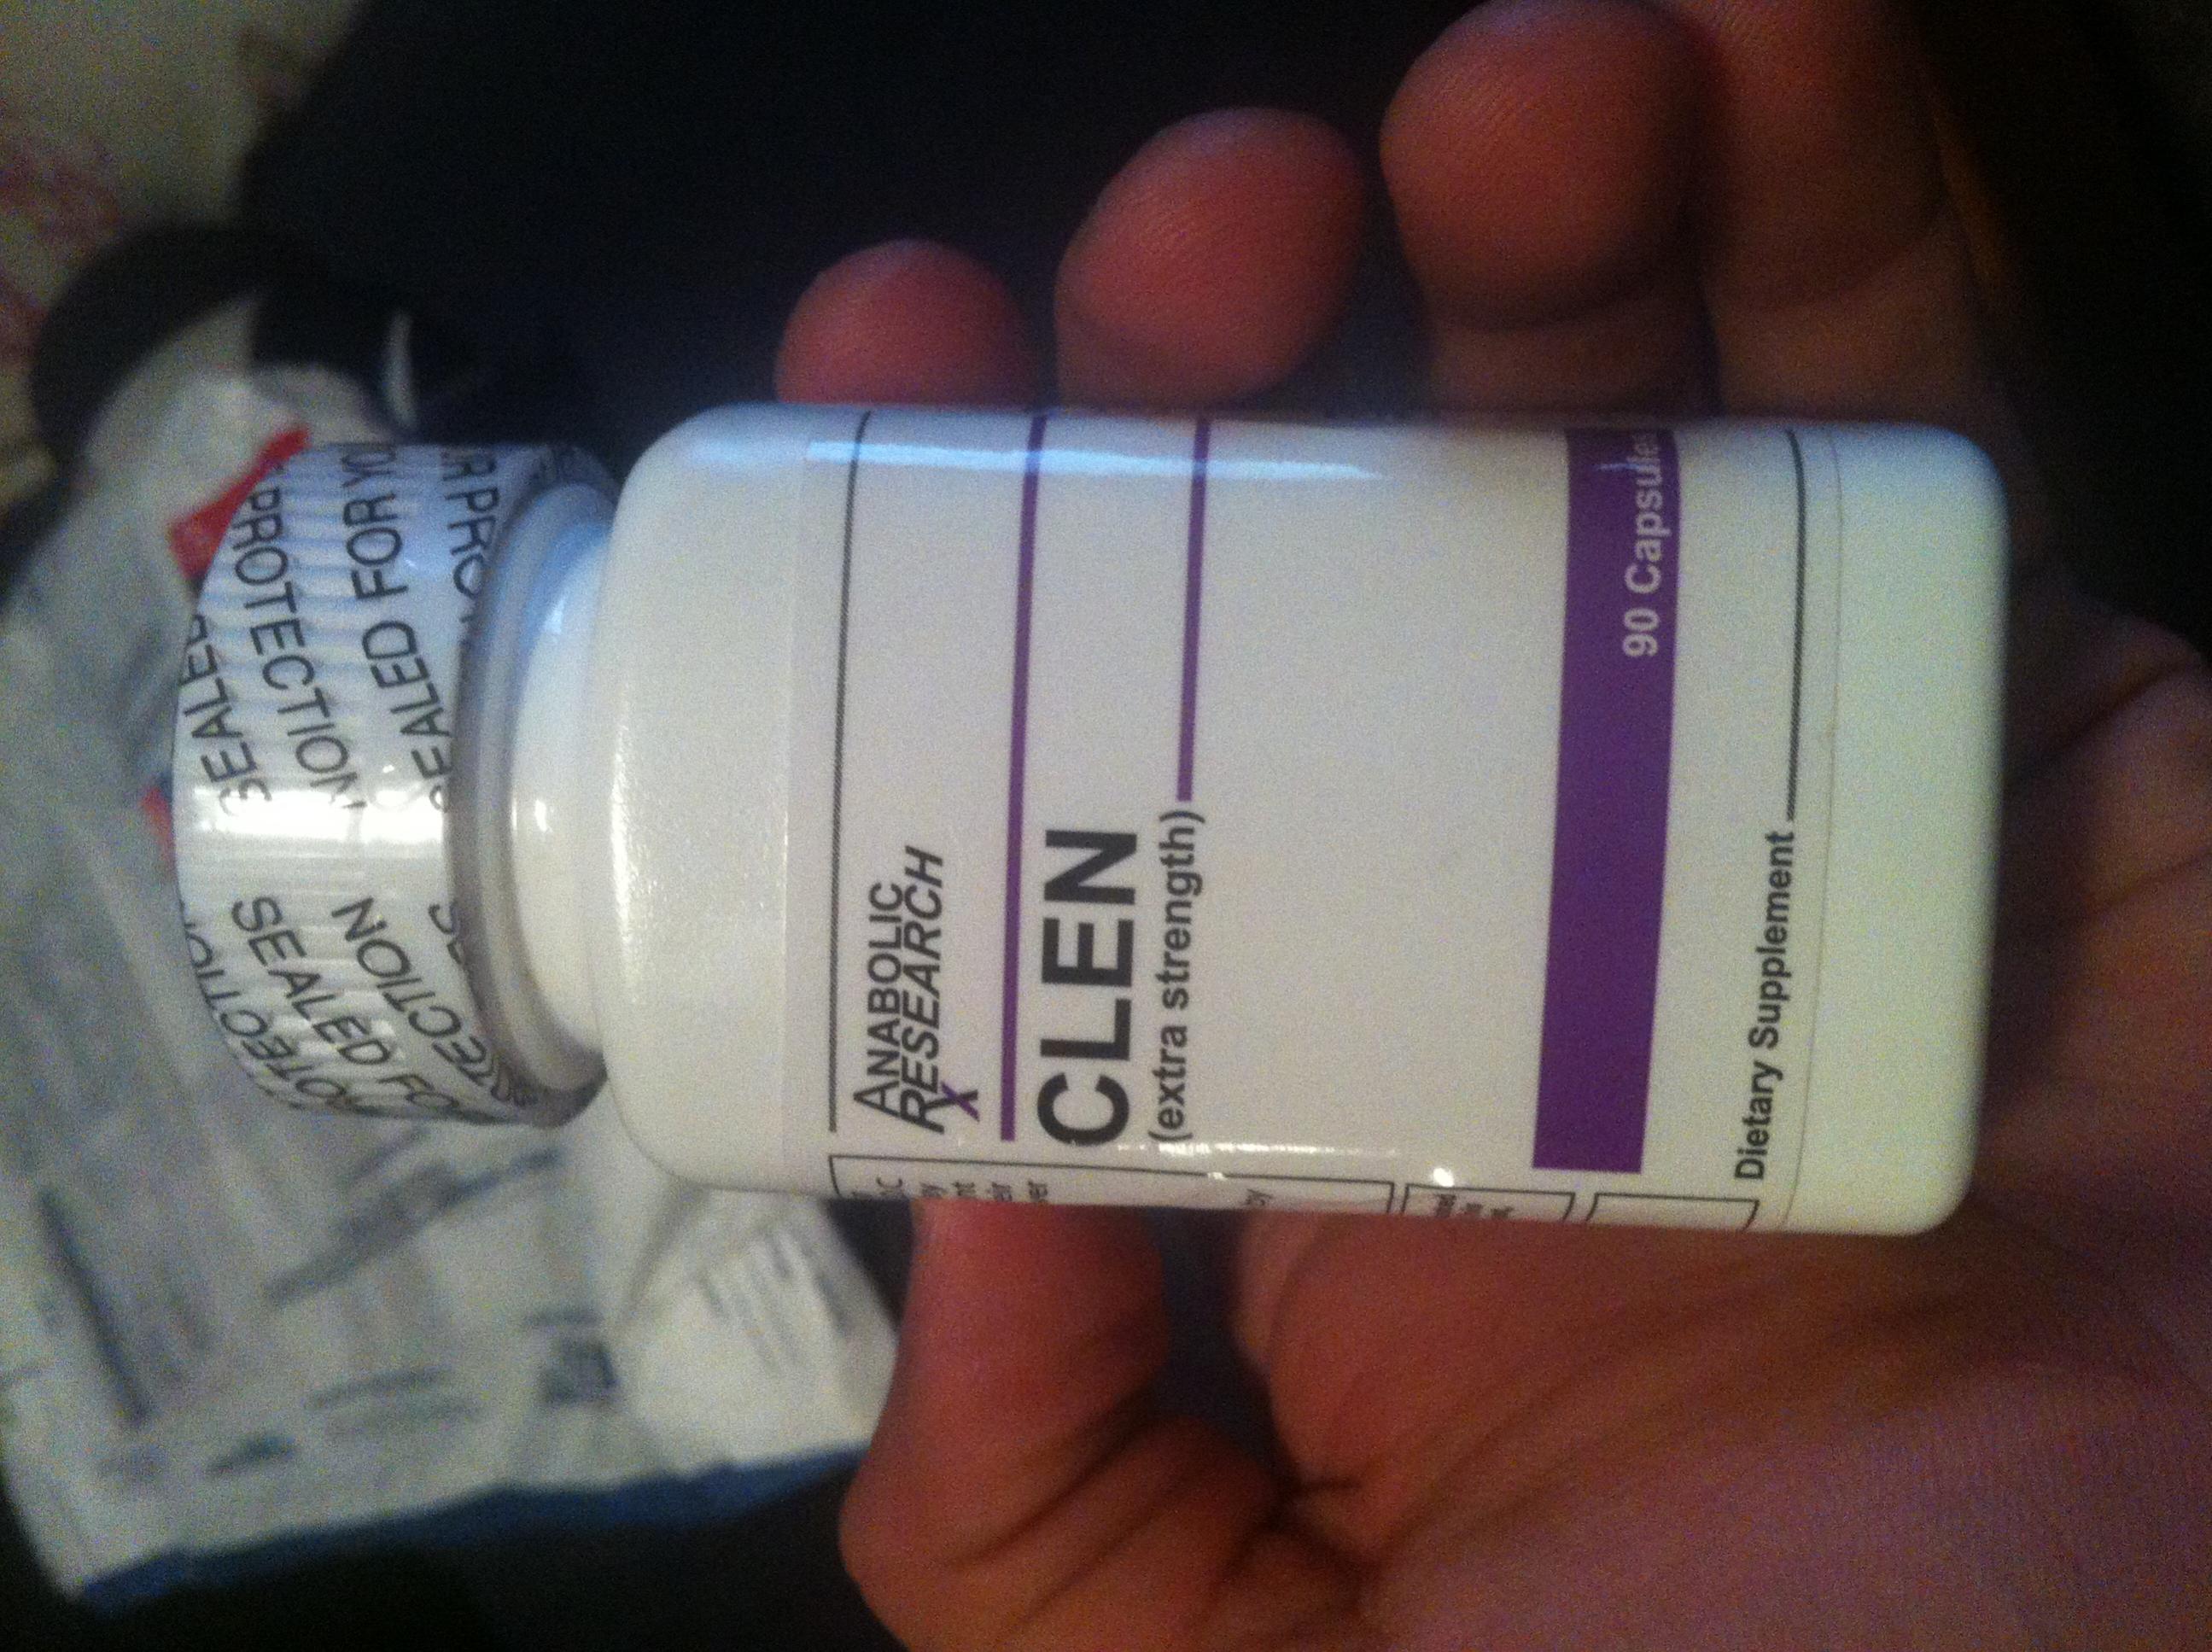 Clen medication